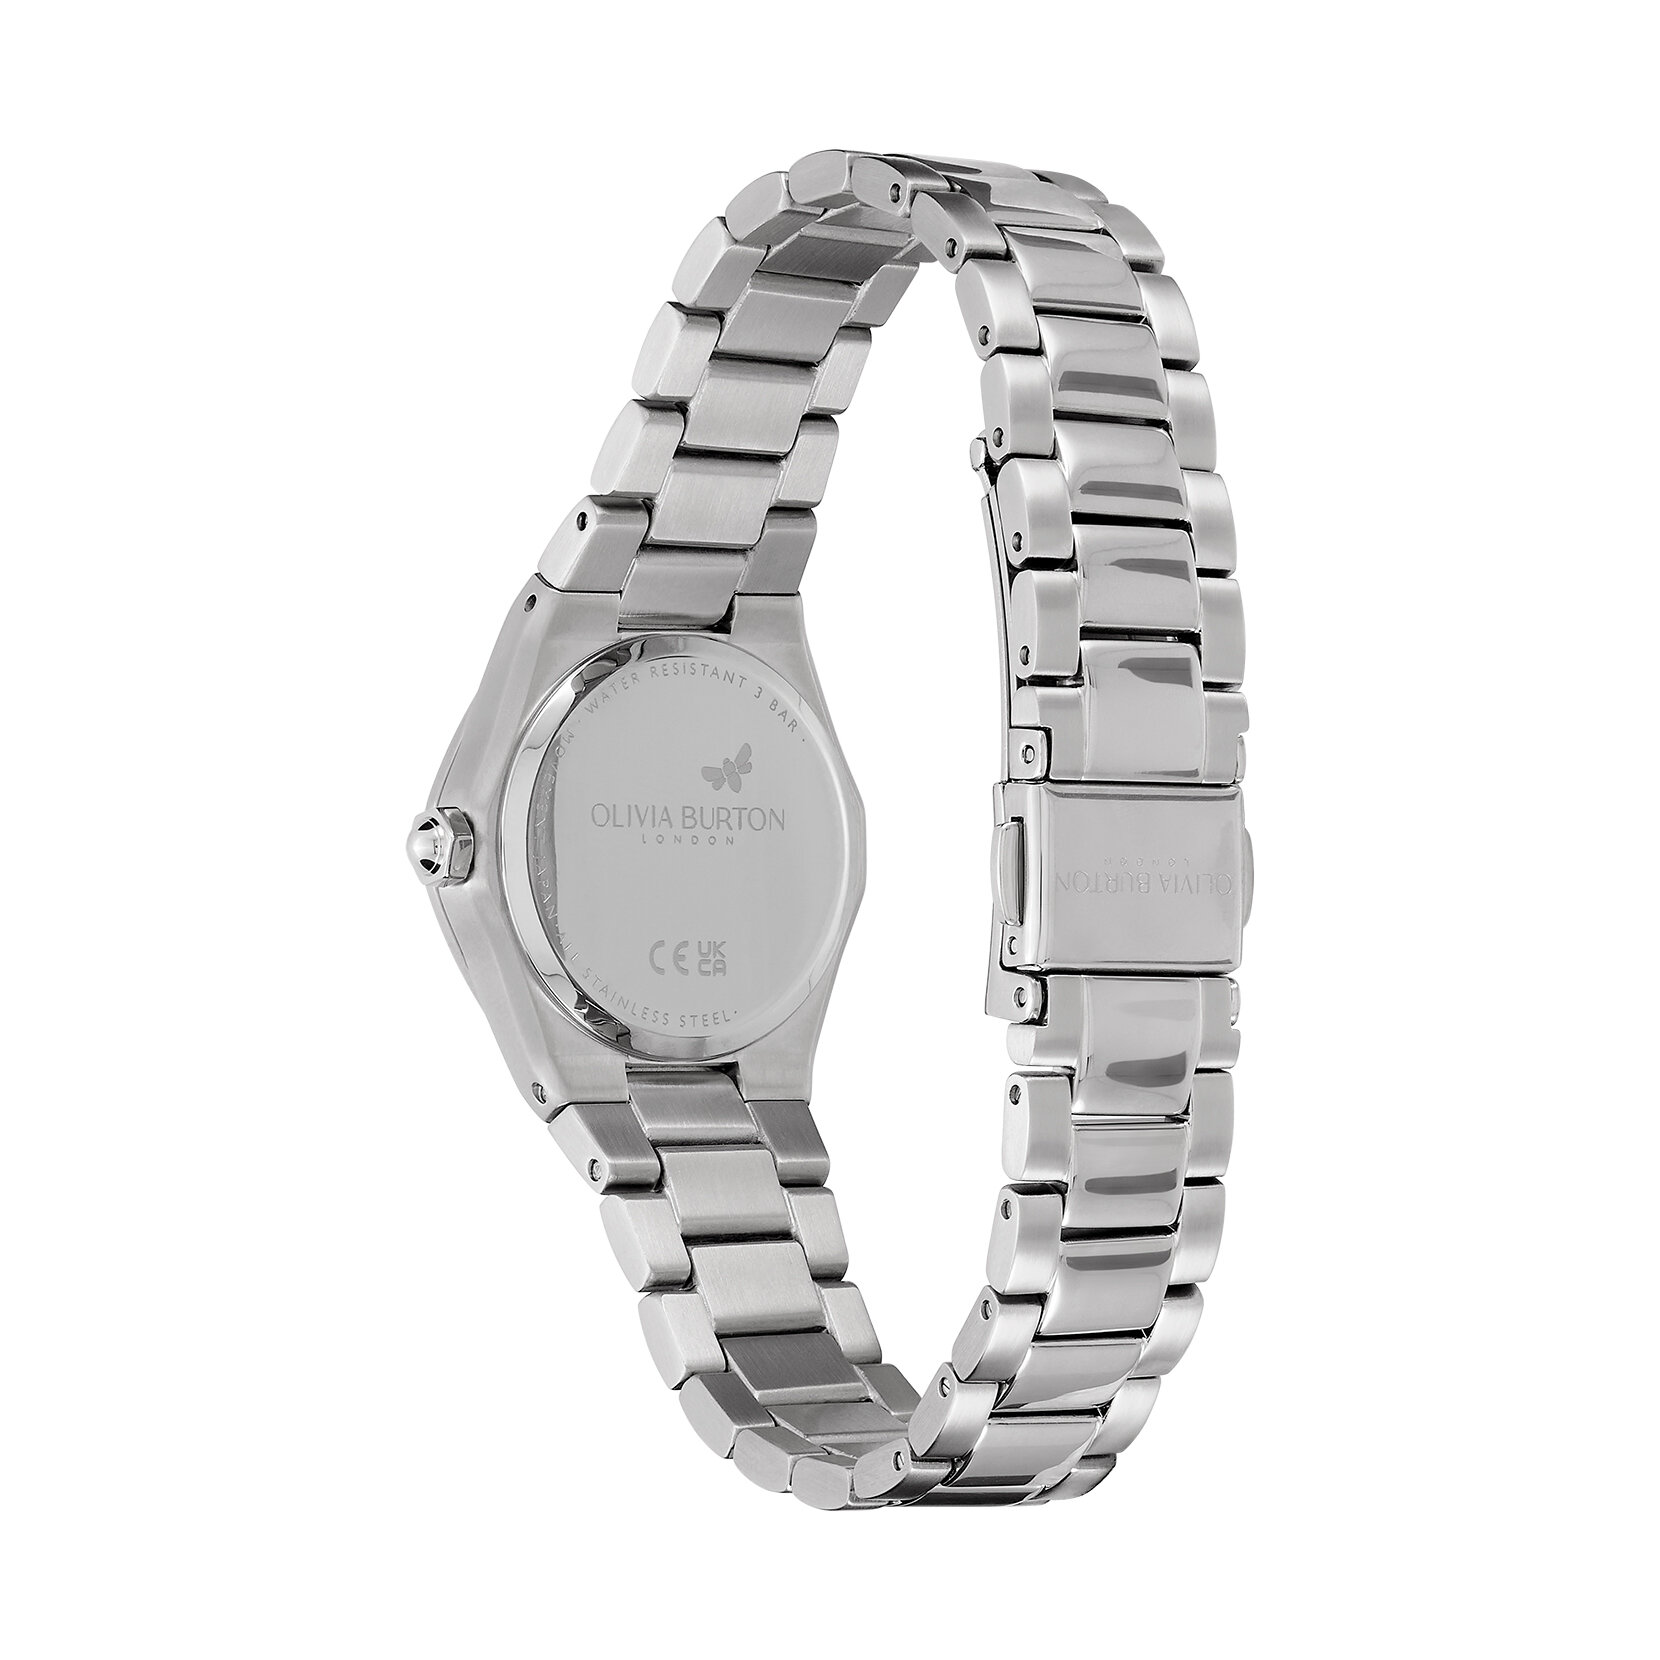 28mm Mini Hexa White & Silver Bracelet Watch